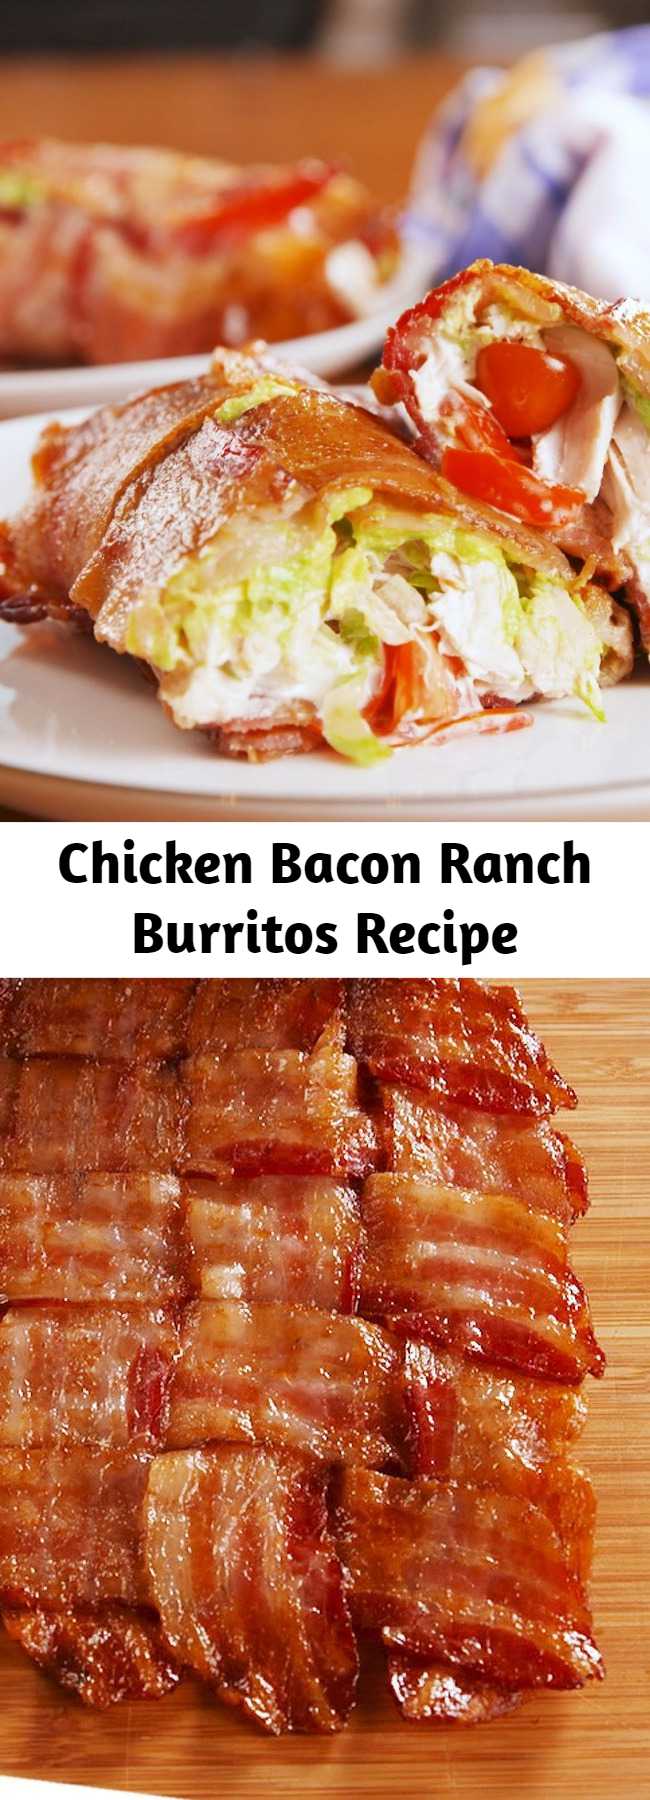 Chicken Bacon Ranch Burritos Recipe